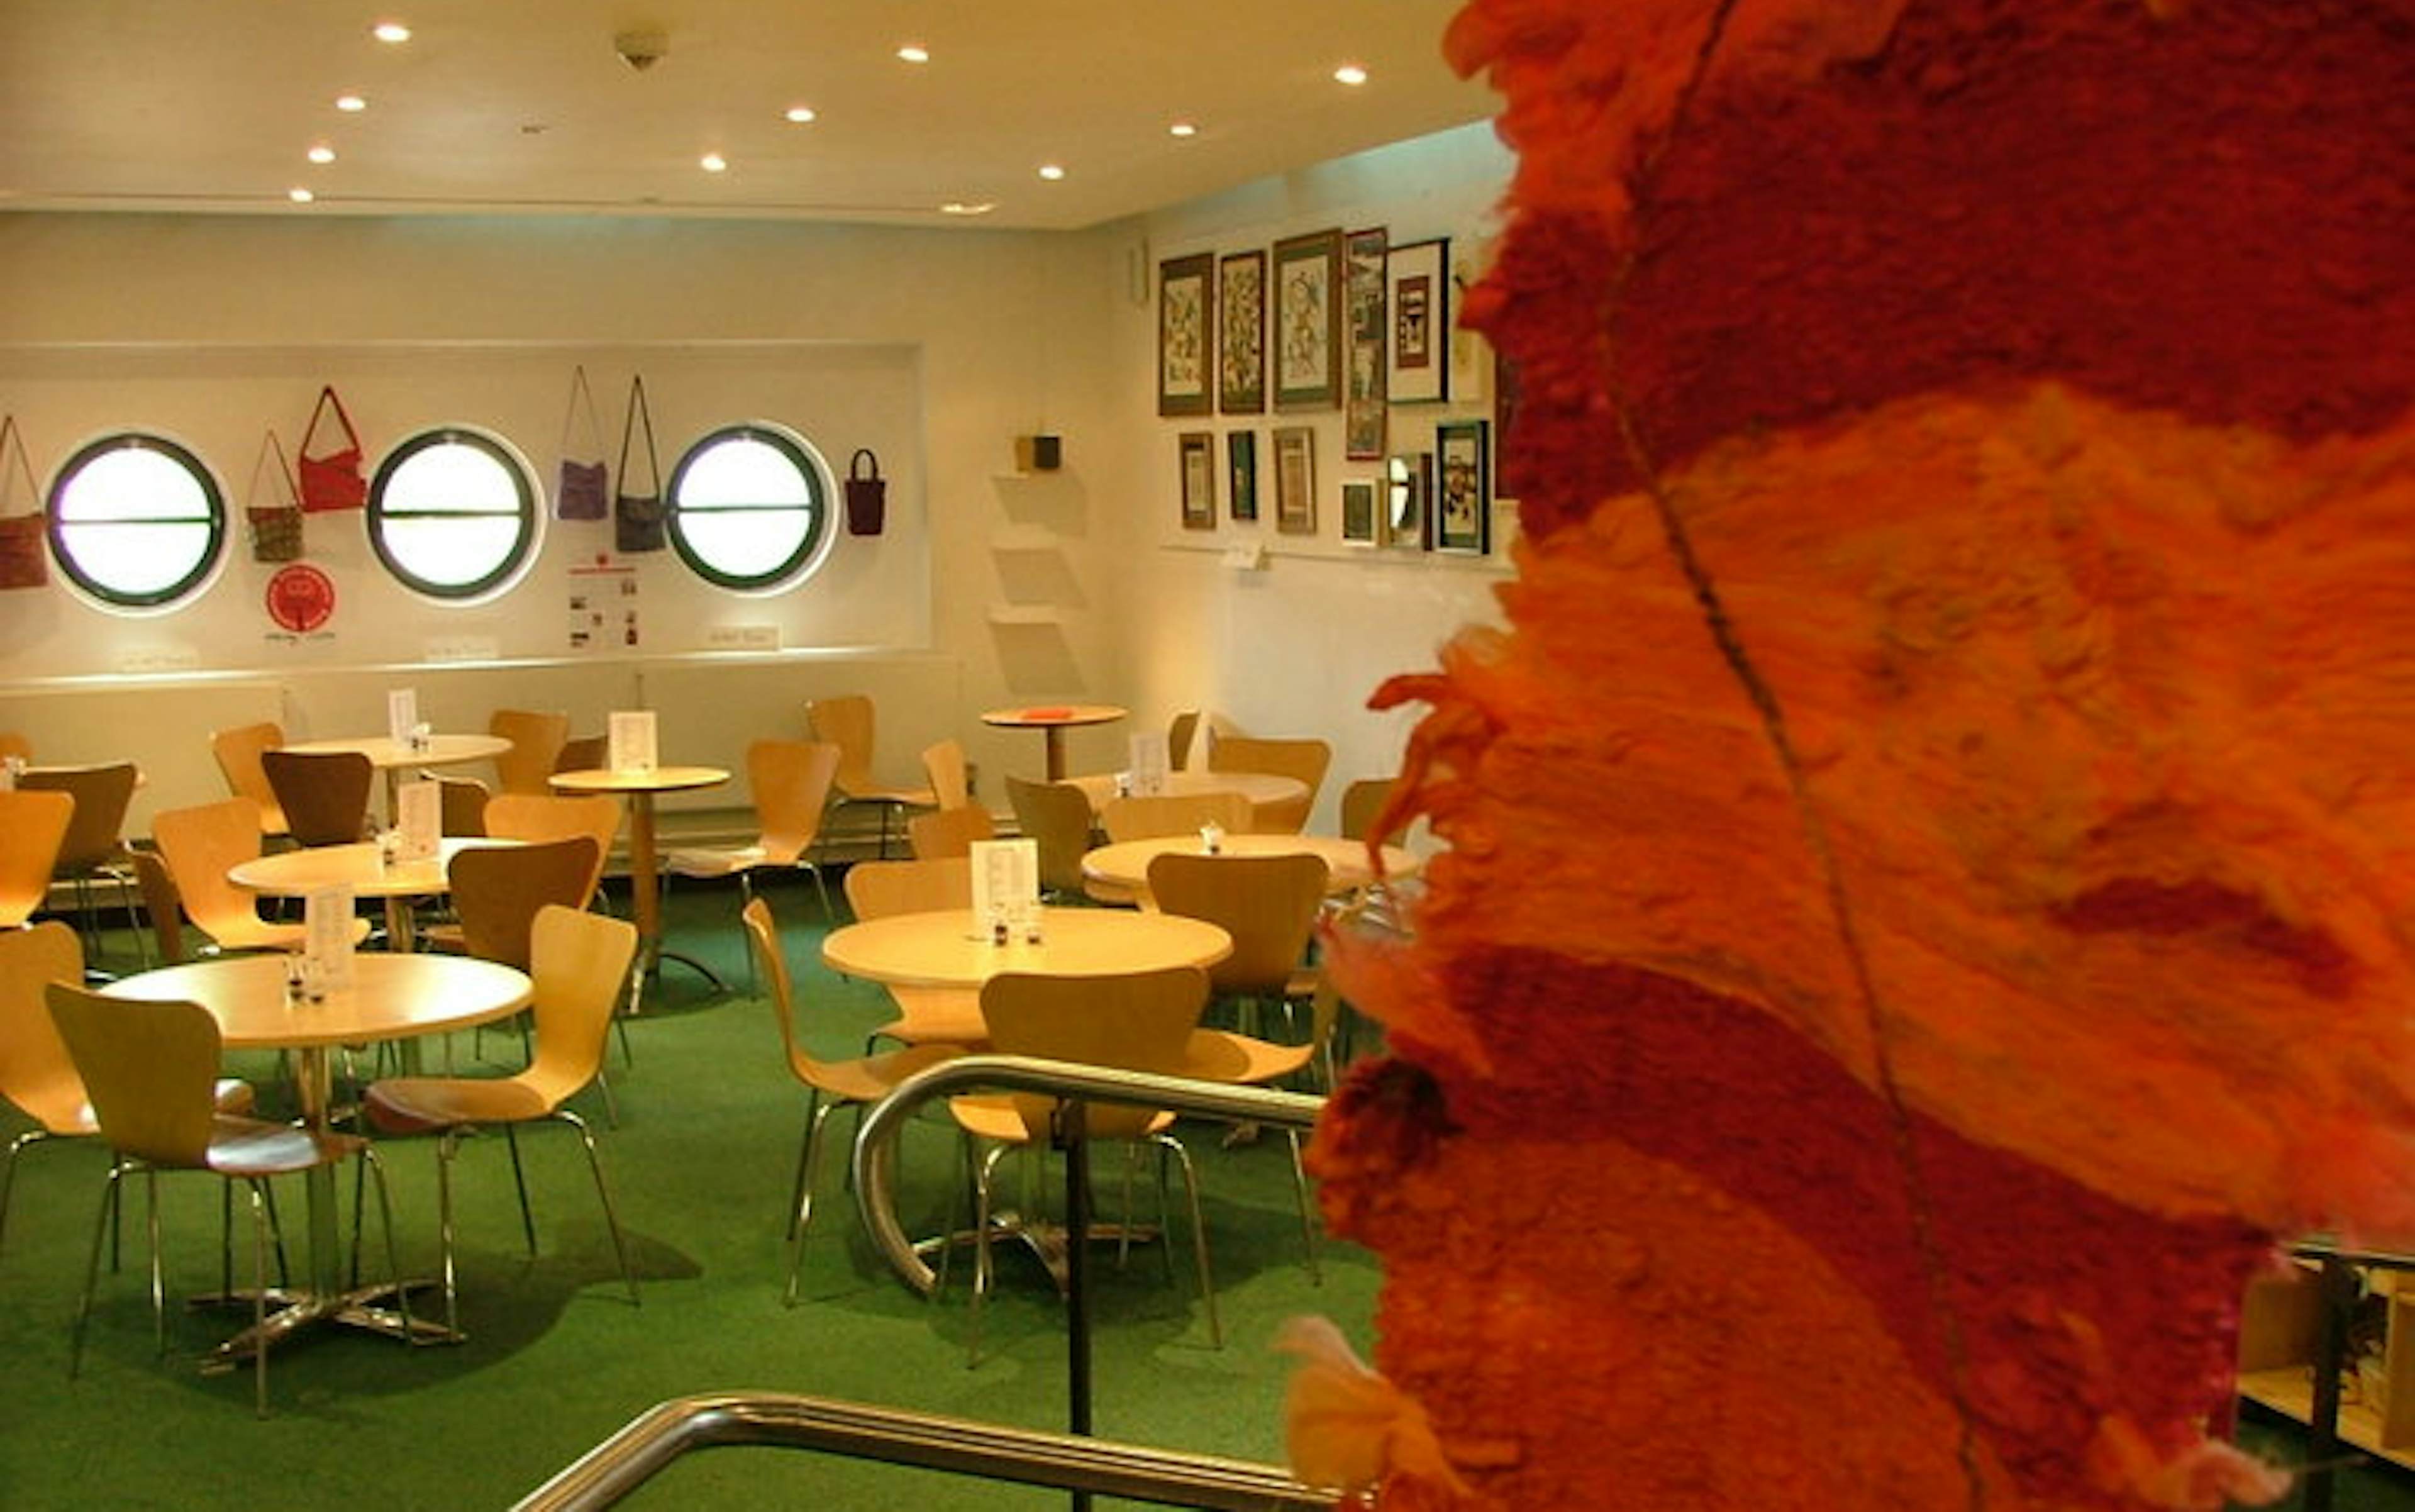 Trestle Theatre Company - Gallery Cafe image 1